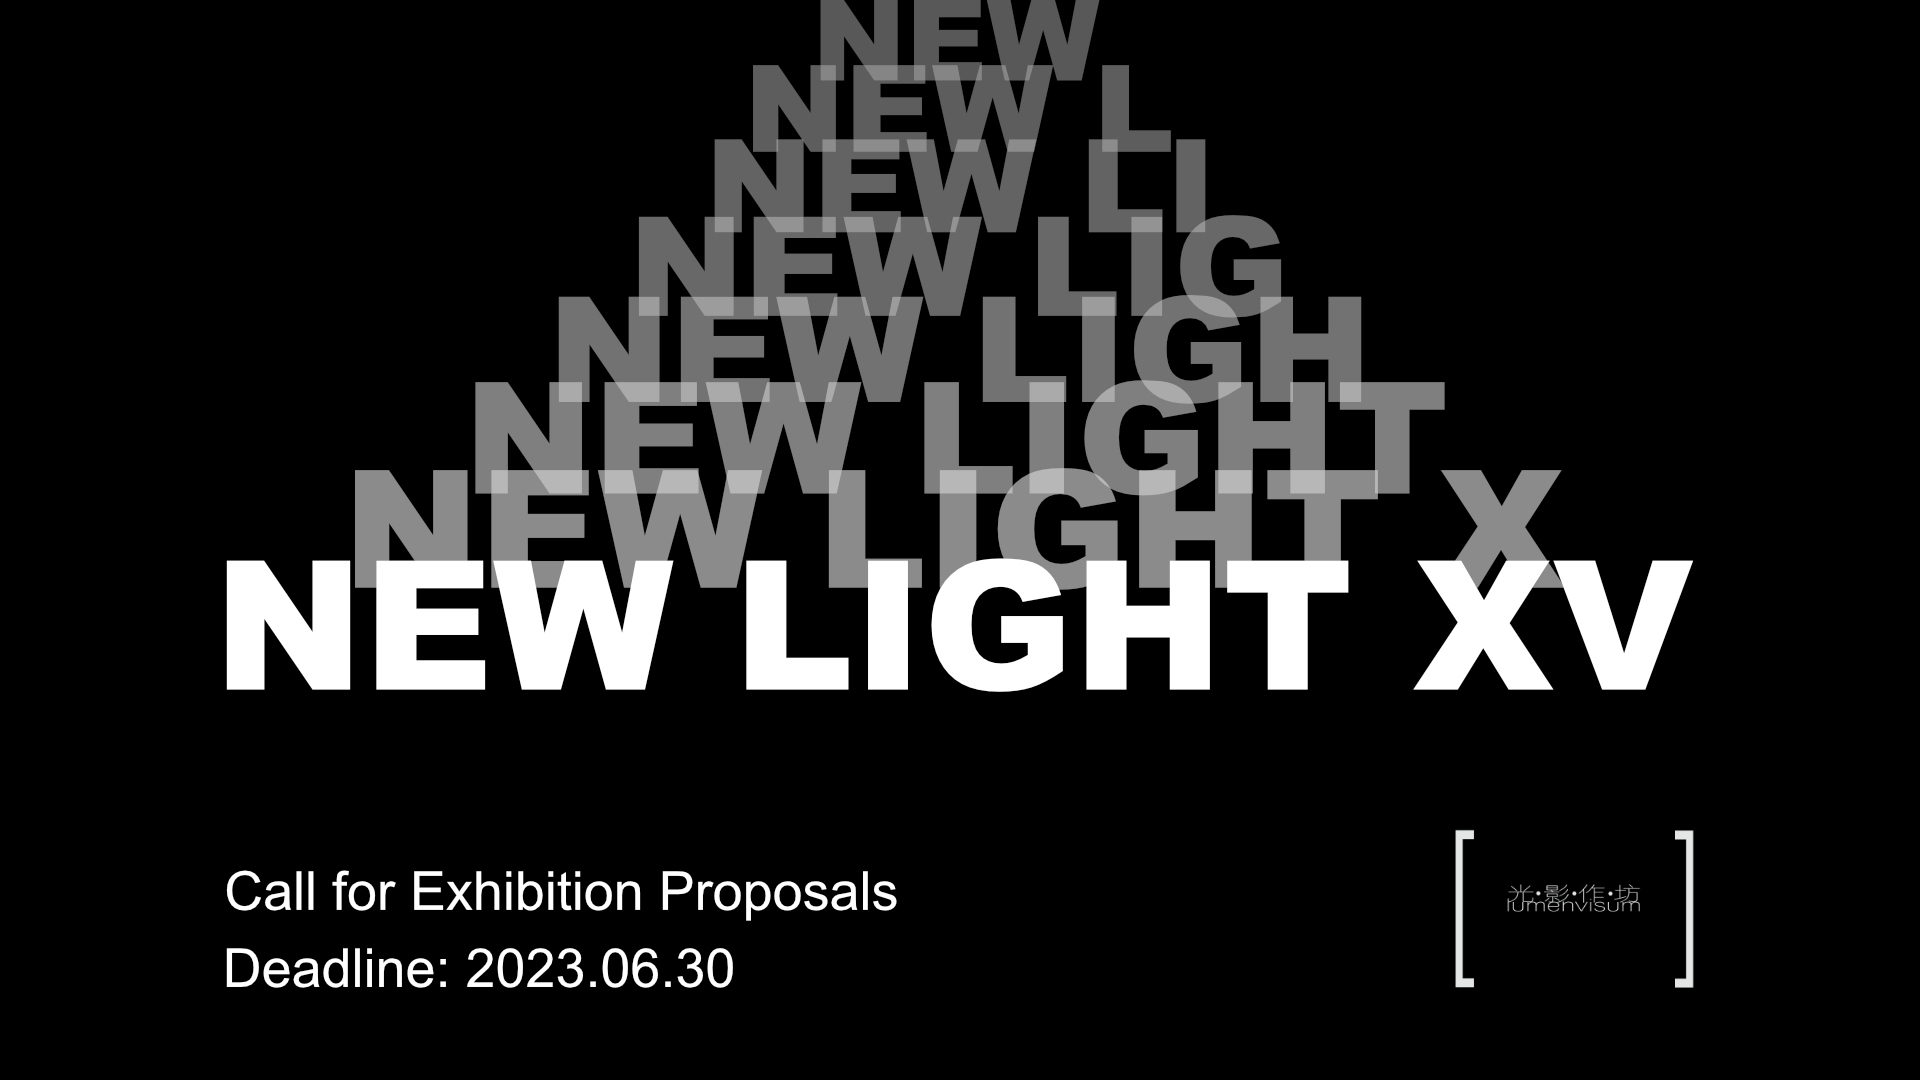 New Light XV 徵集展覽提案